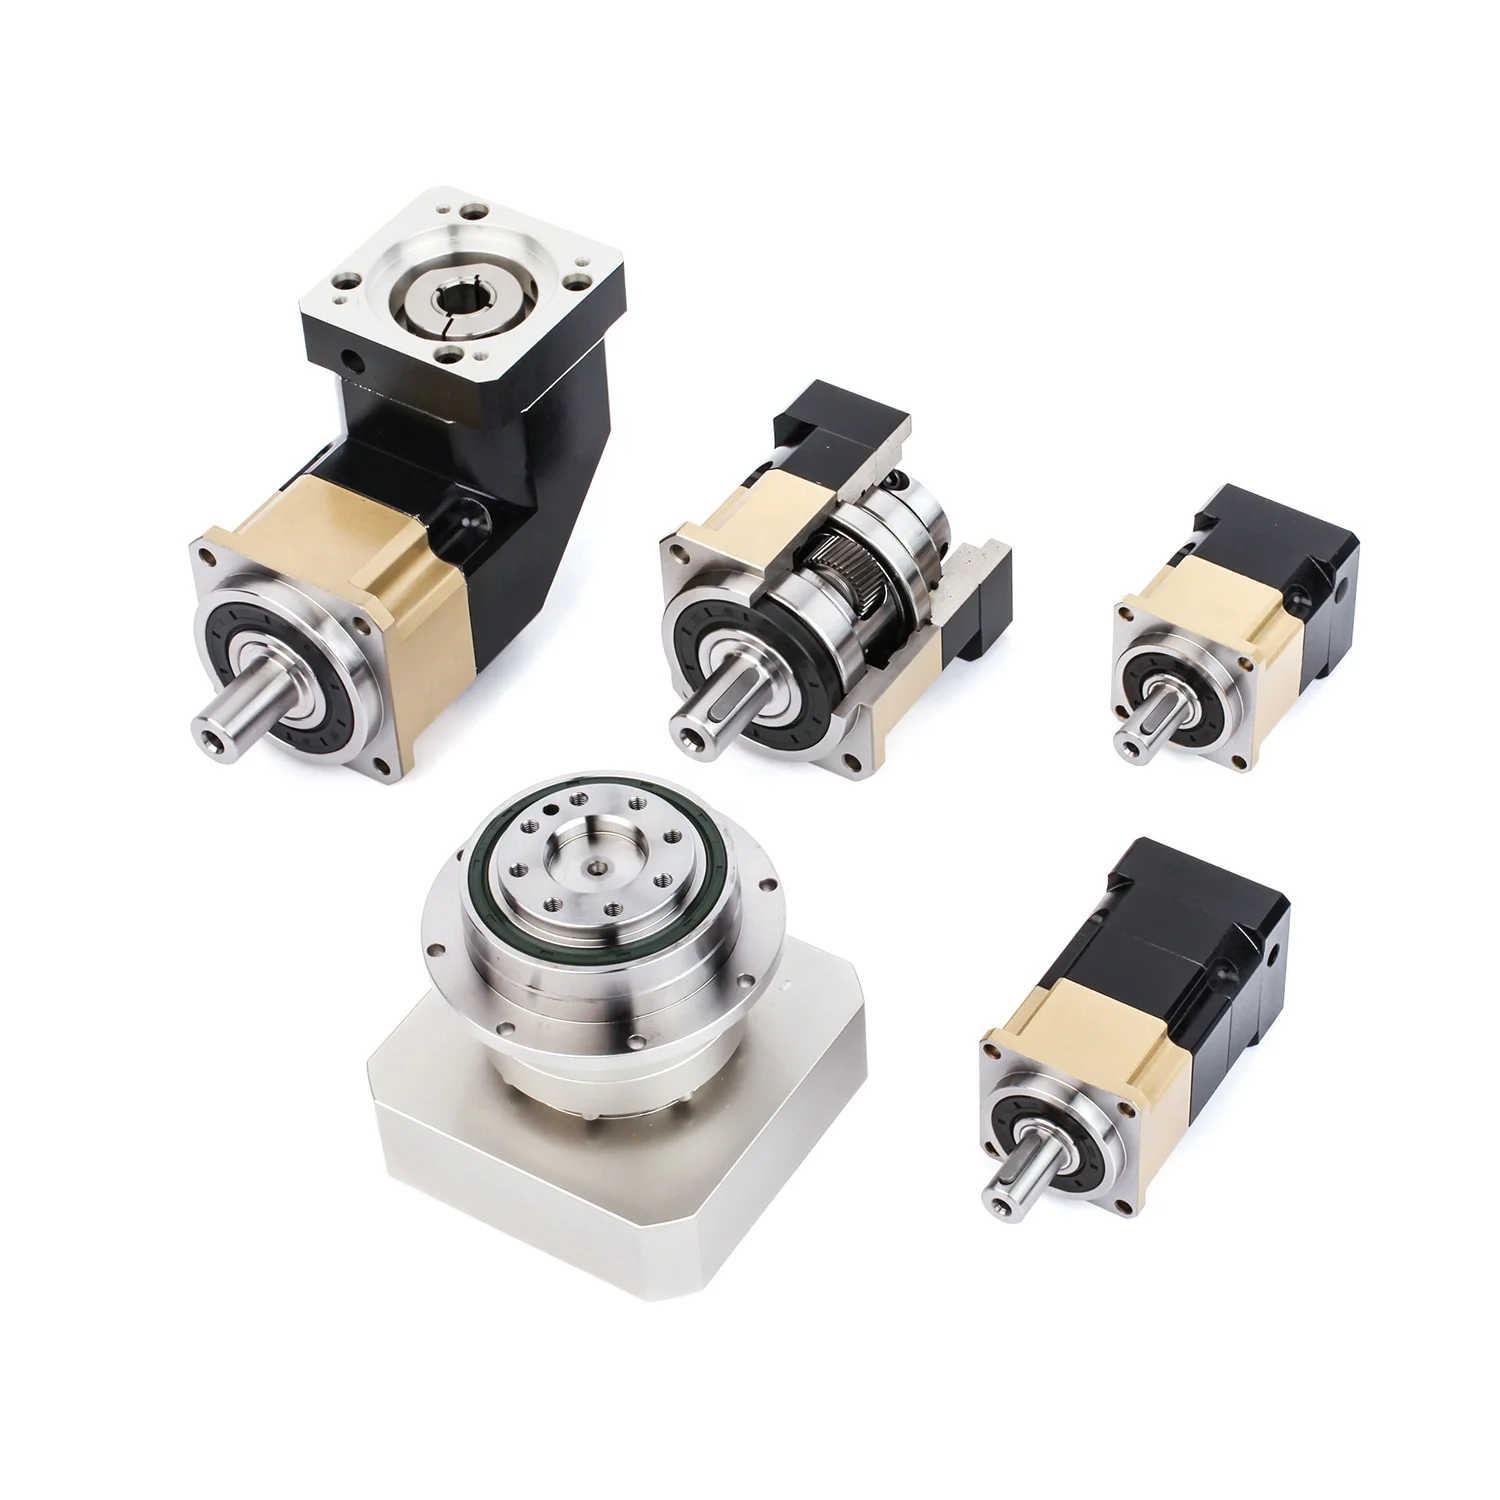 
CNC High Torque Small Mini Micro Planetary Gearbox Design  (62184912764)